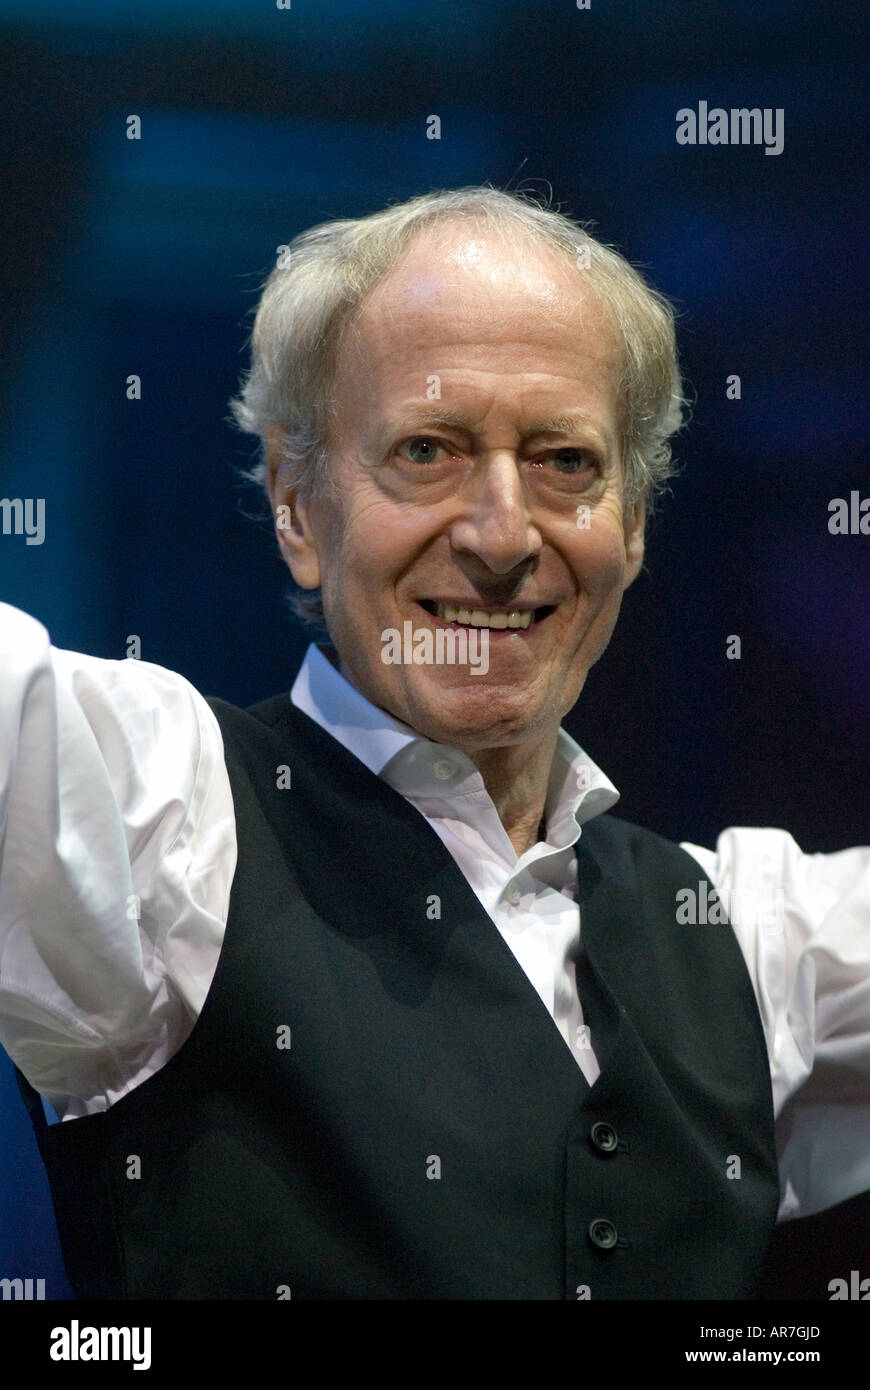 Late Oscar winning British film composer John Barry (1933-2011) in concert at Royal Albert Hall, London, UK, 28th September 2006. Stock Photo